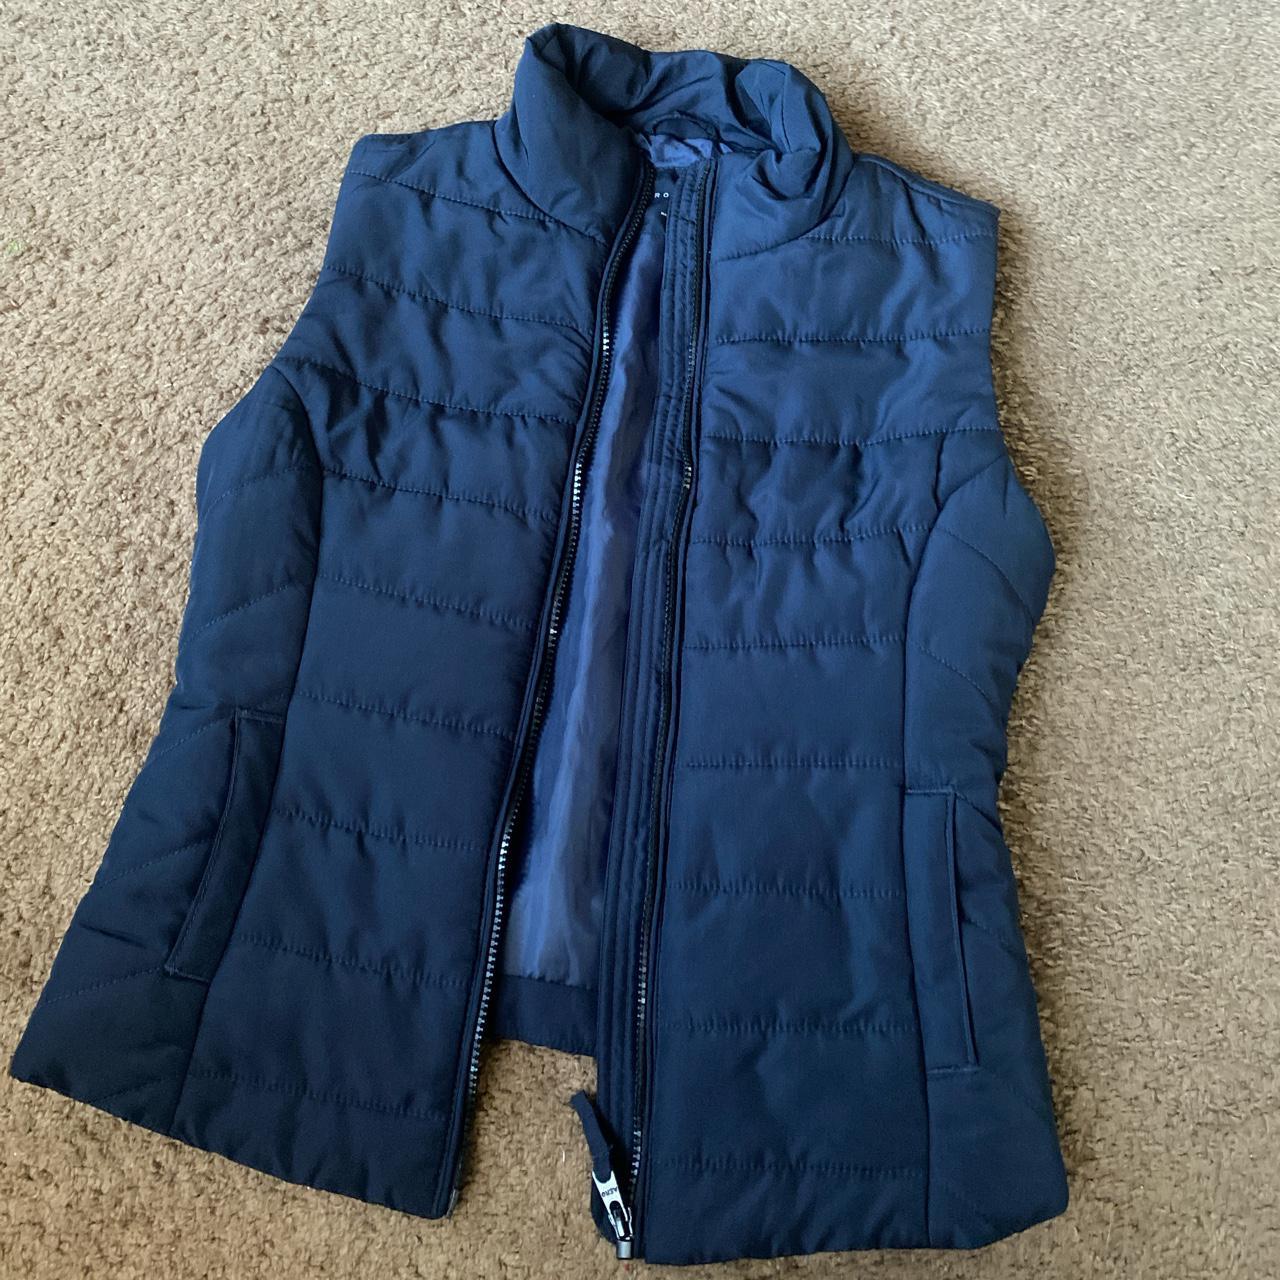 Cute Blue Vest Jacket Perfect for Fall Aeropostale... - Depop